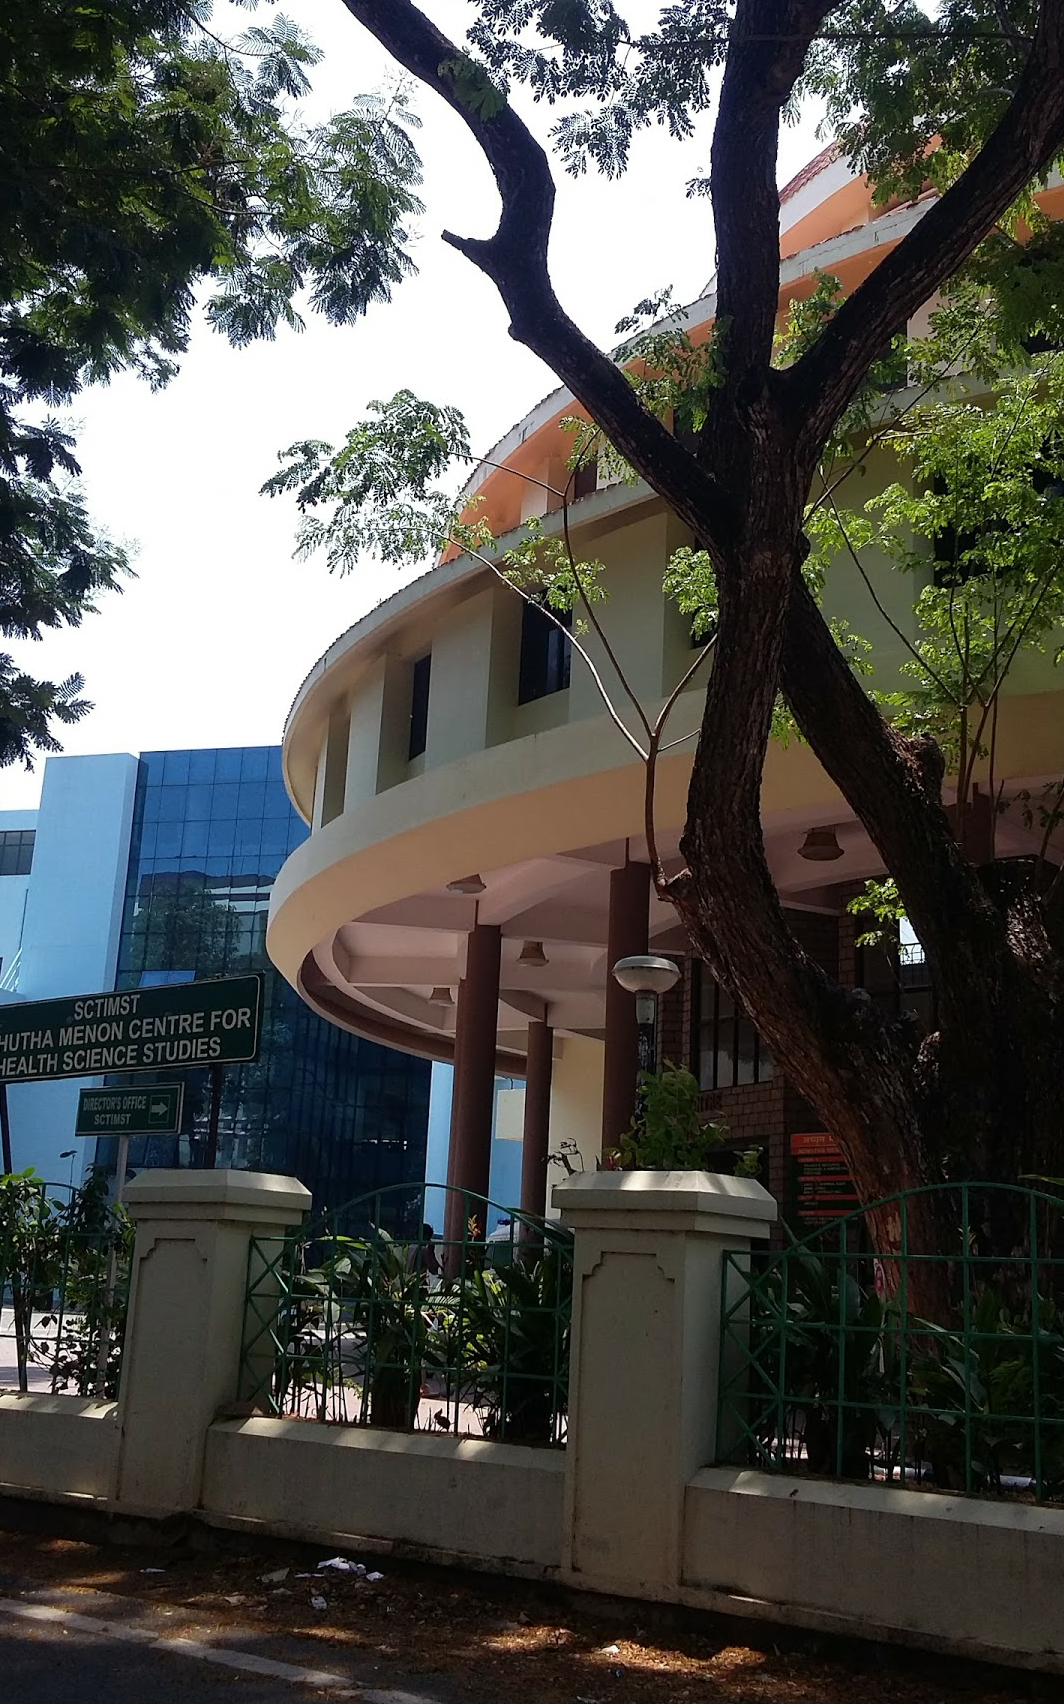 Achutha Menon Centre for Health Science Studies